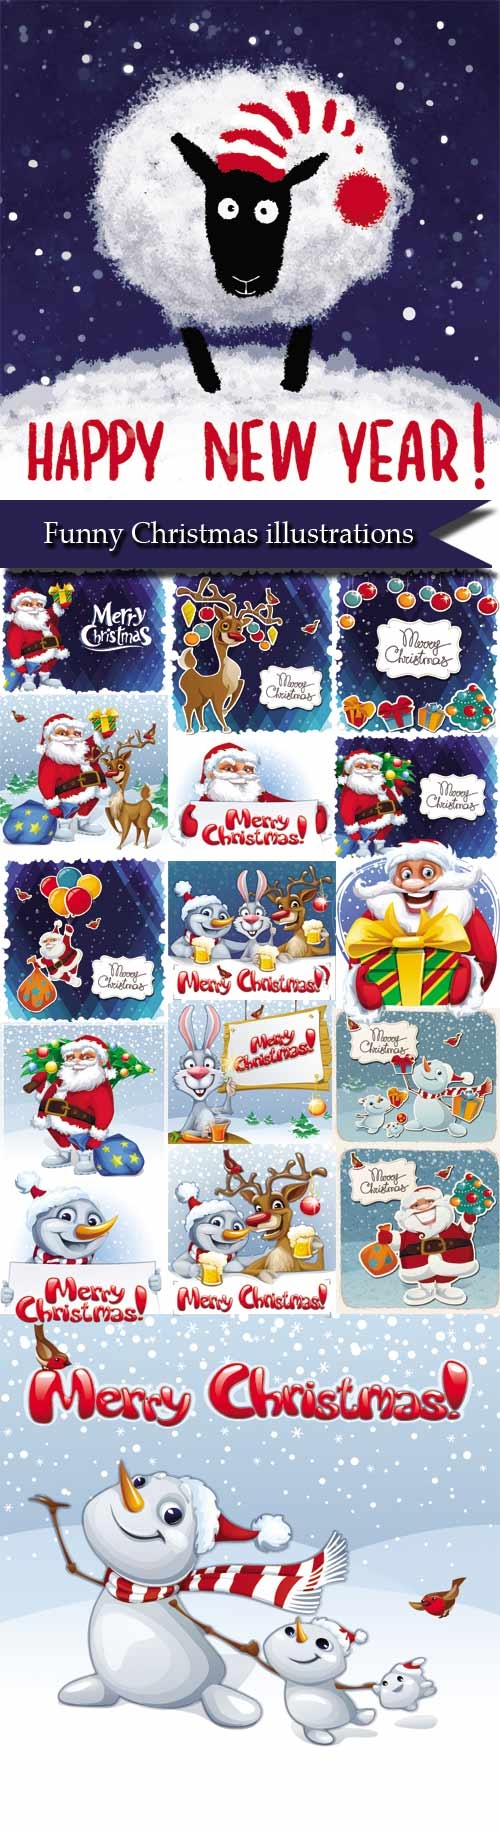 Funny Christmas illustrations